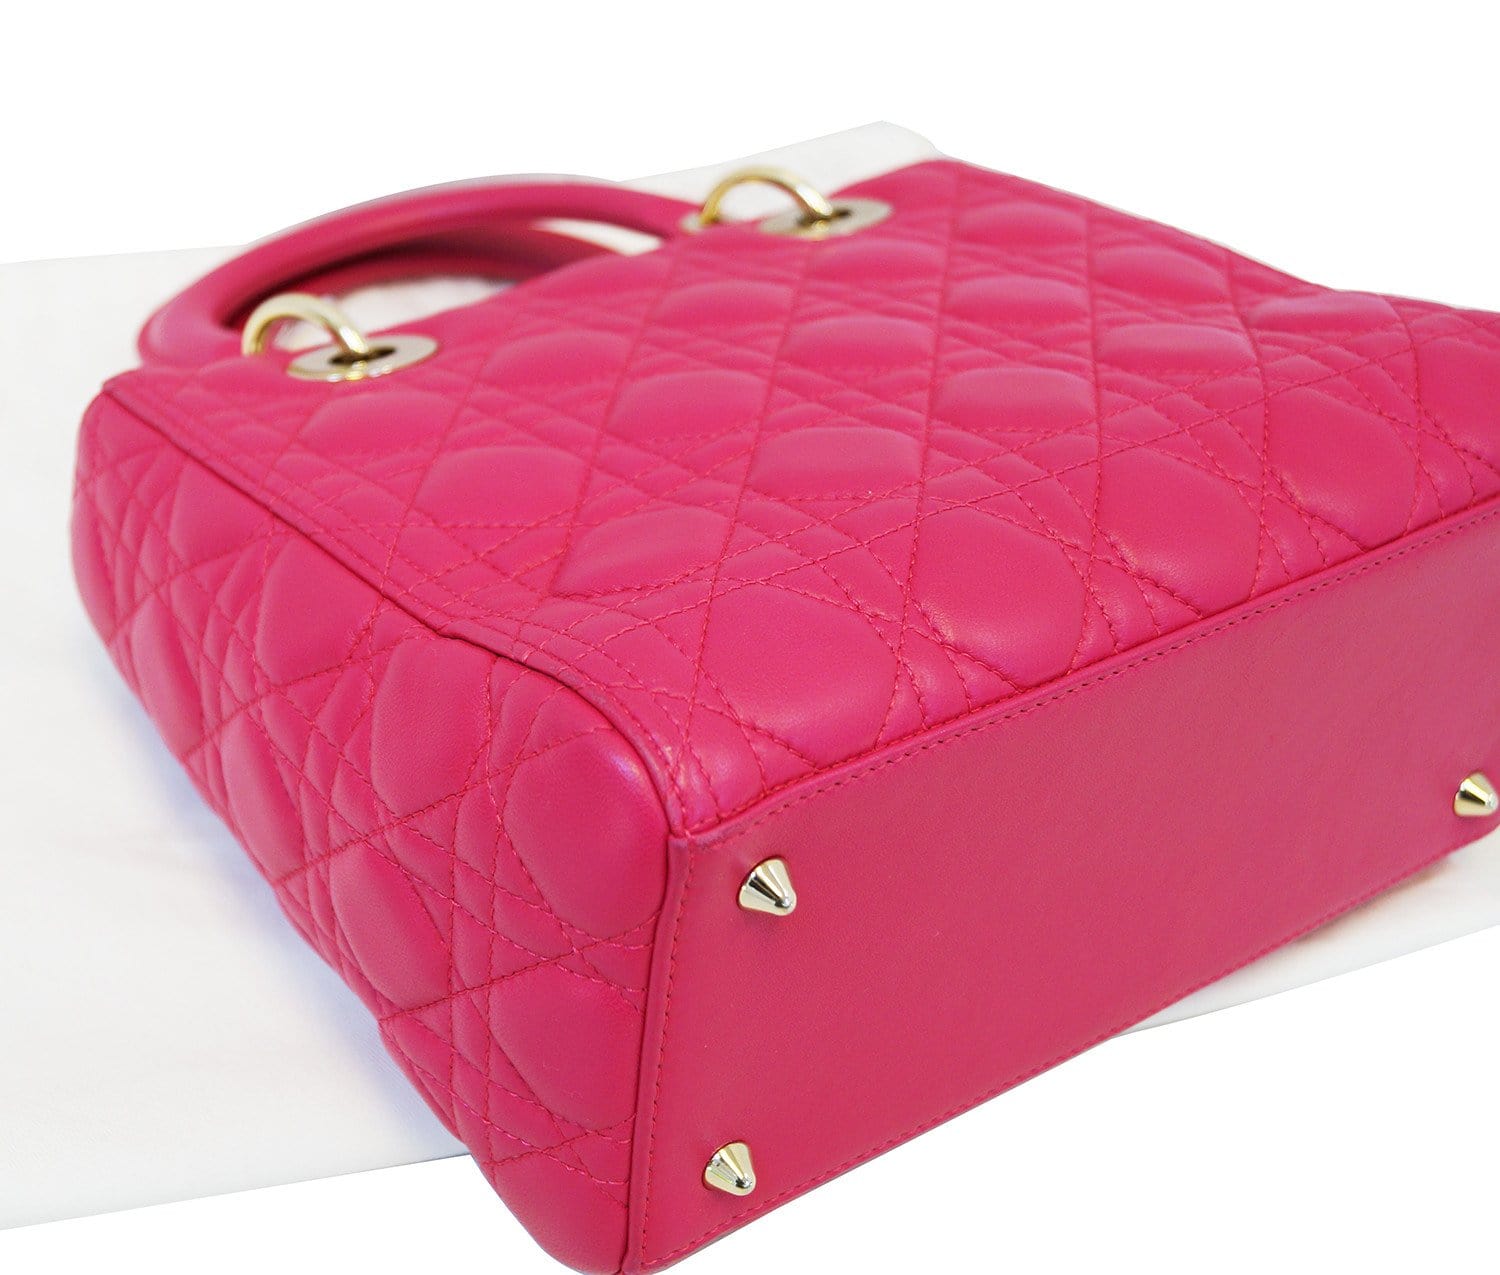 Dior Lady Dior bag hot pink